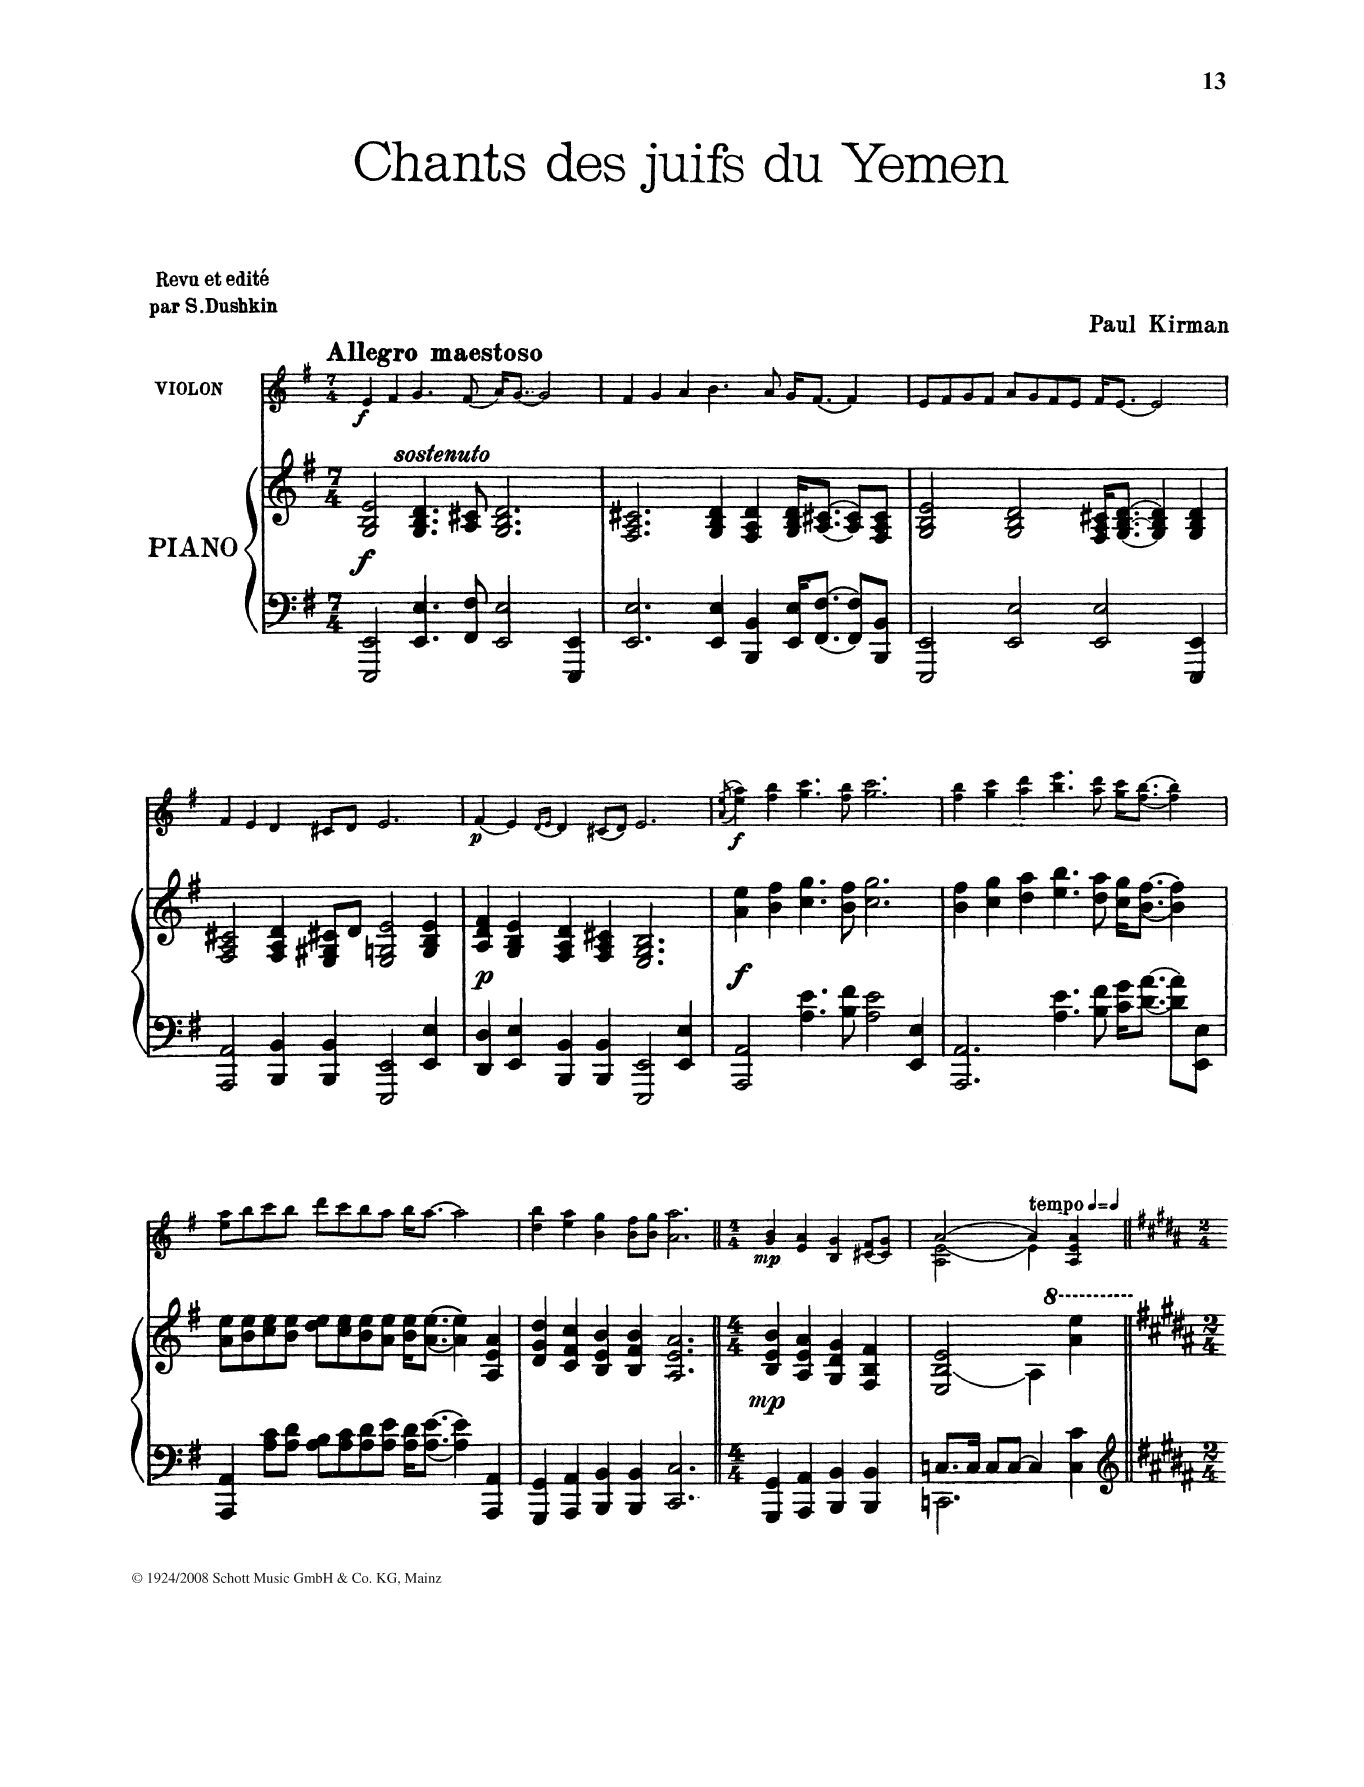 Paul Kirman Chants des juifs du Yemen Sheet Music Notes & Chords for String Solo - Download or Print PDF